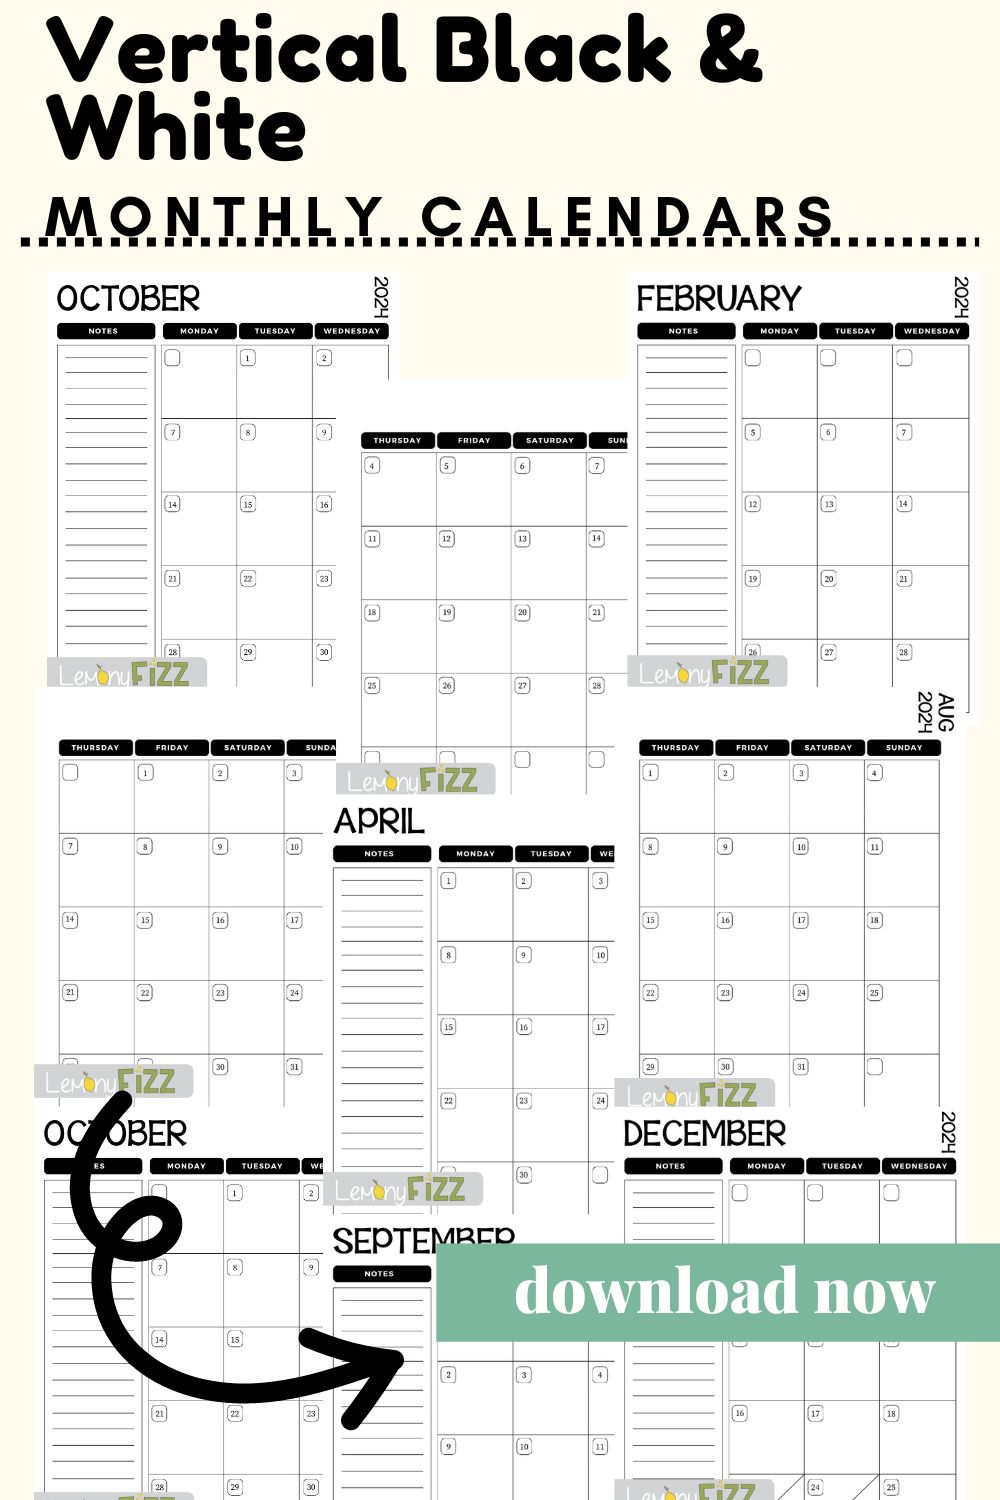 Vertical Black and White Calendar